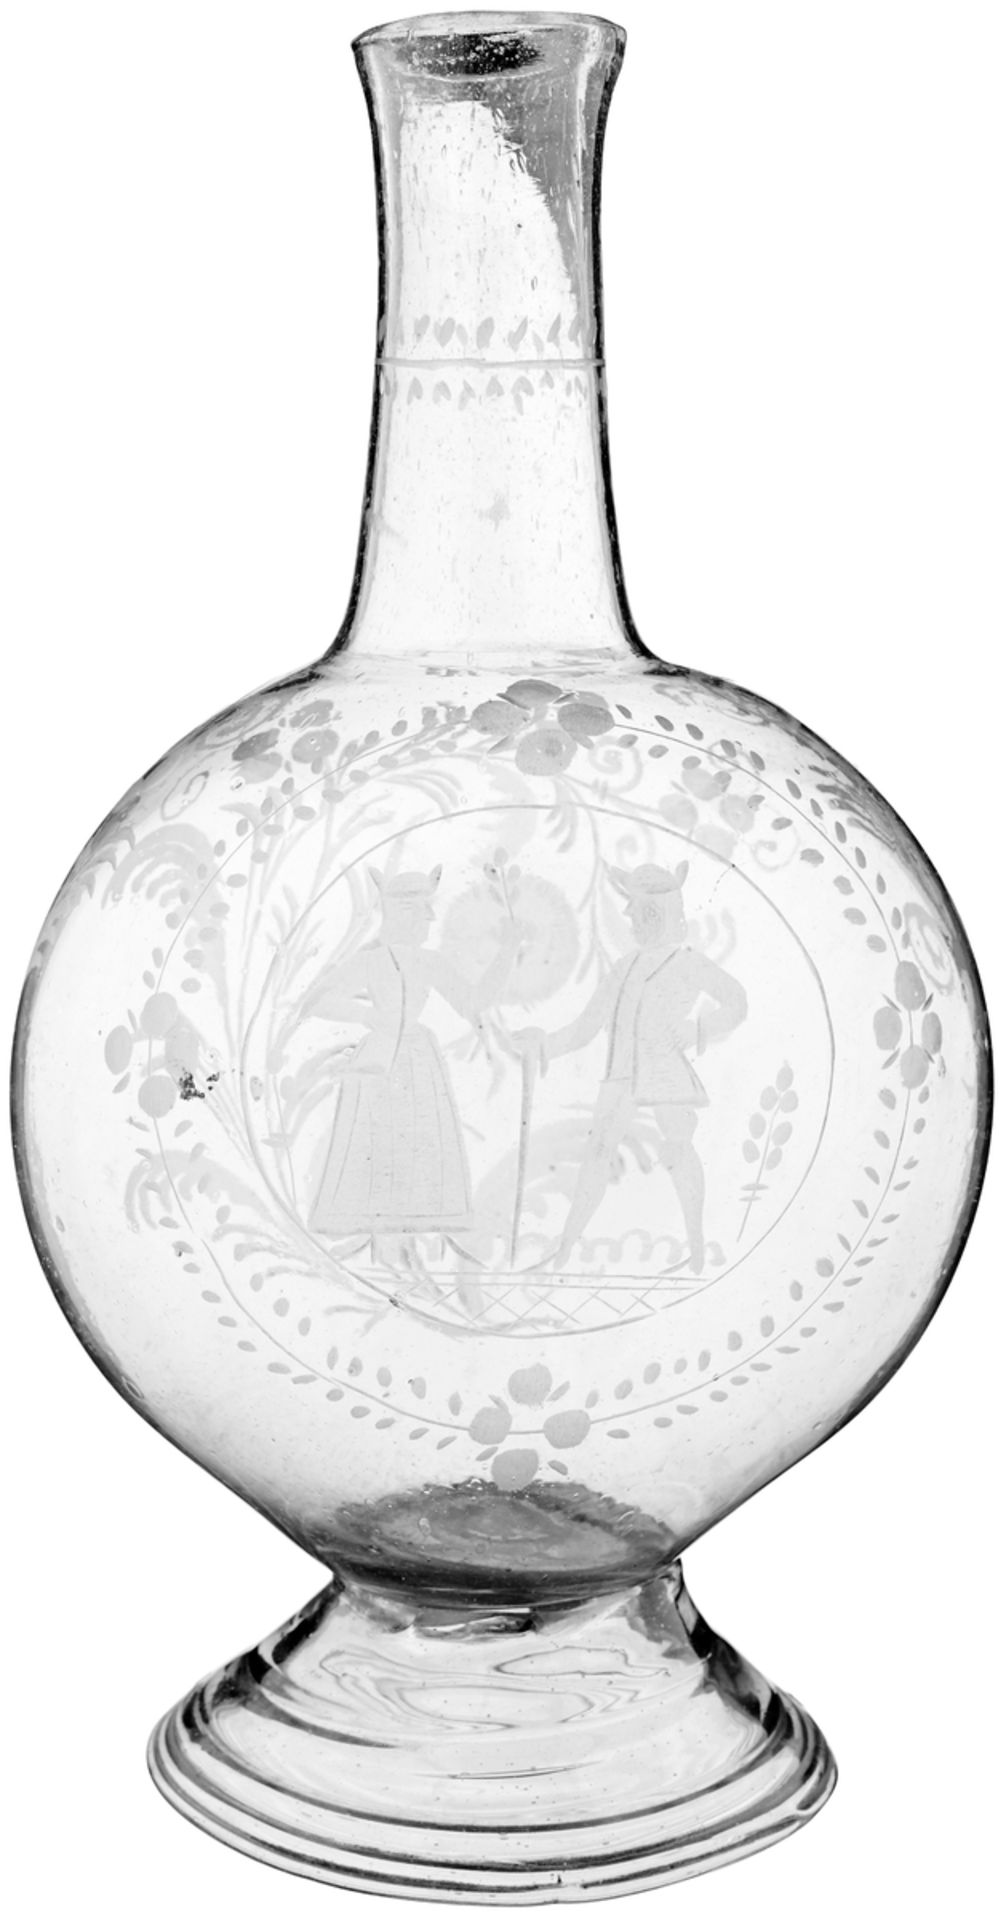 MassflascheWohl Flühli, um 1800. Farbloses, dünnwandig geblasenes Glas. Abgeplattete Kugelform.